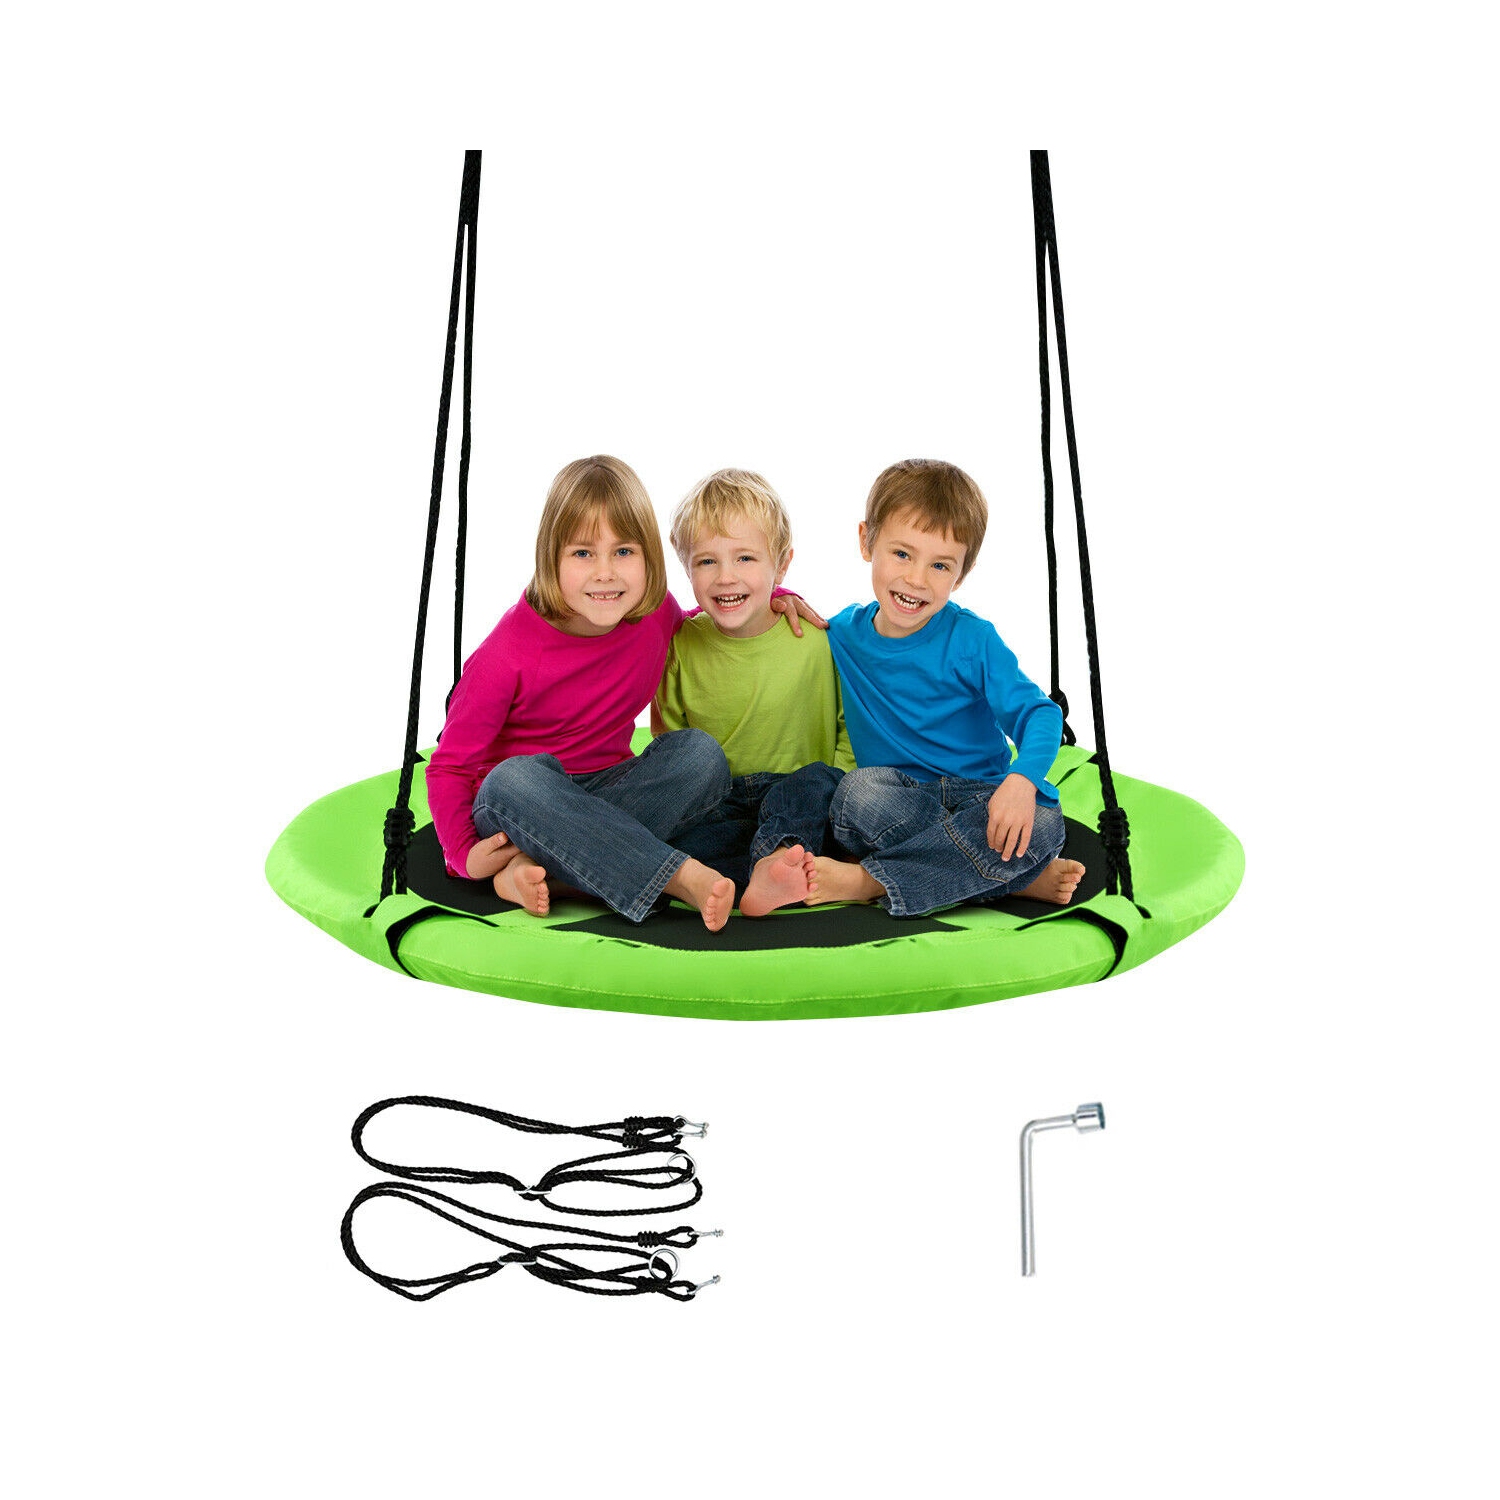 Goplus 40'' Flying Saucer Tree Swing Indoor Outdoor Play Set Kids Christmas Gift